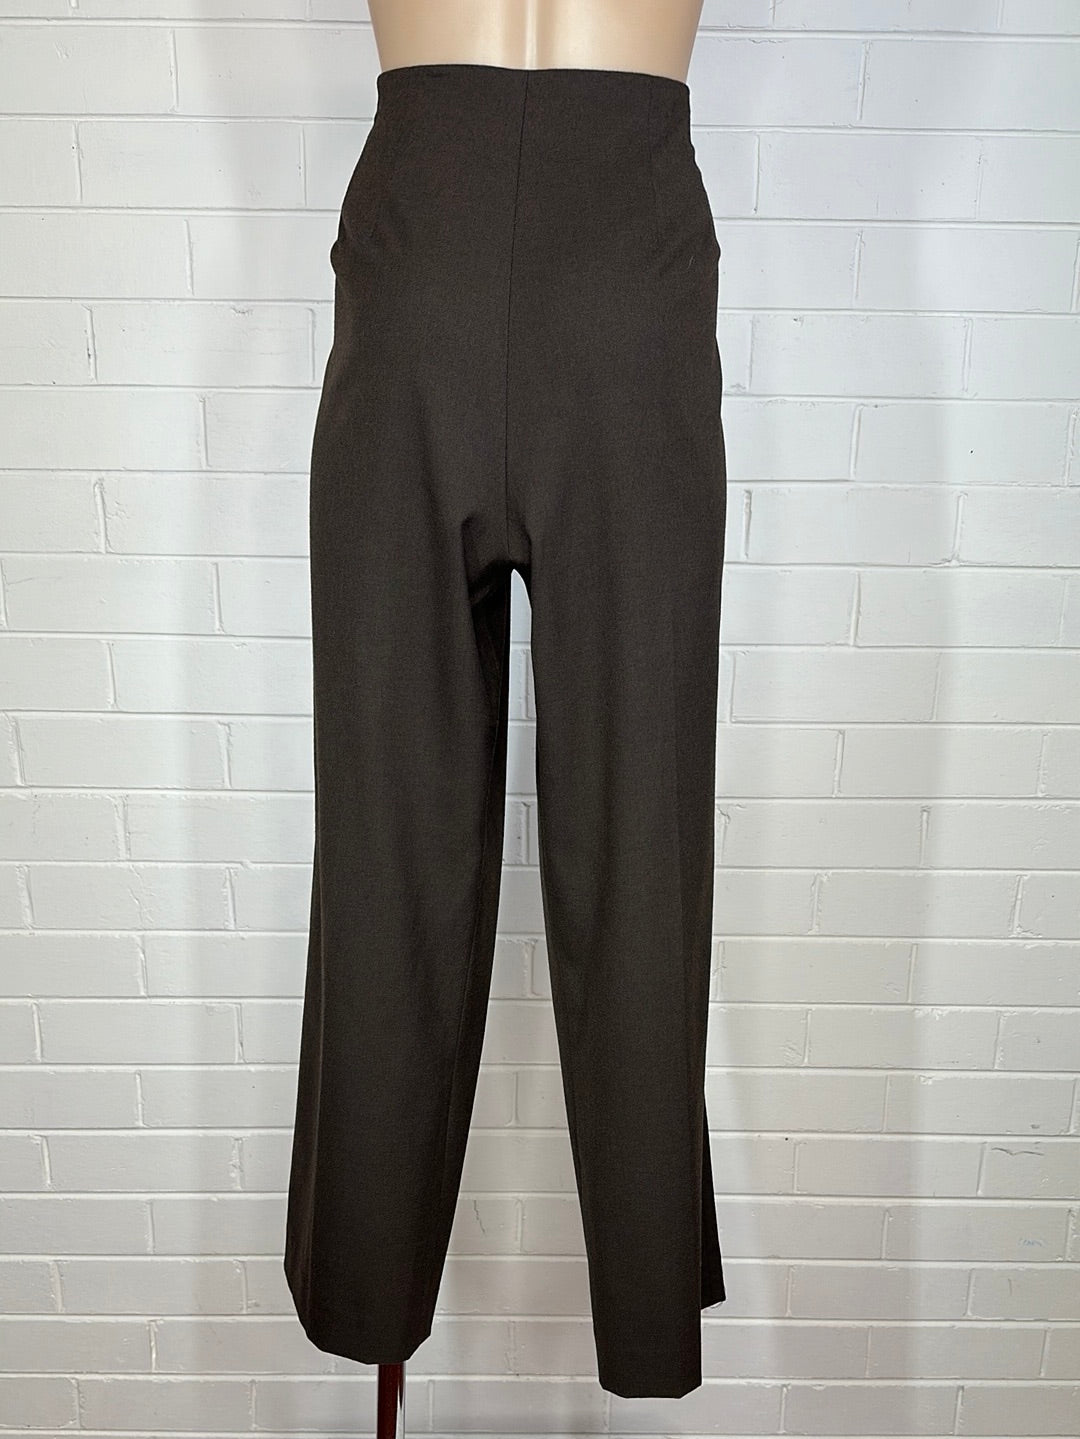 Perri Cutten | vintage 90's | pants | size 14 | straight leg | made in Australia